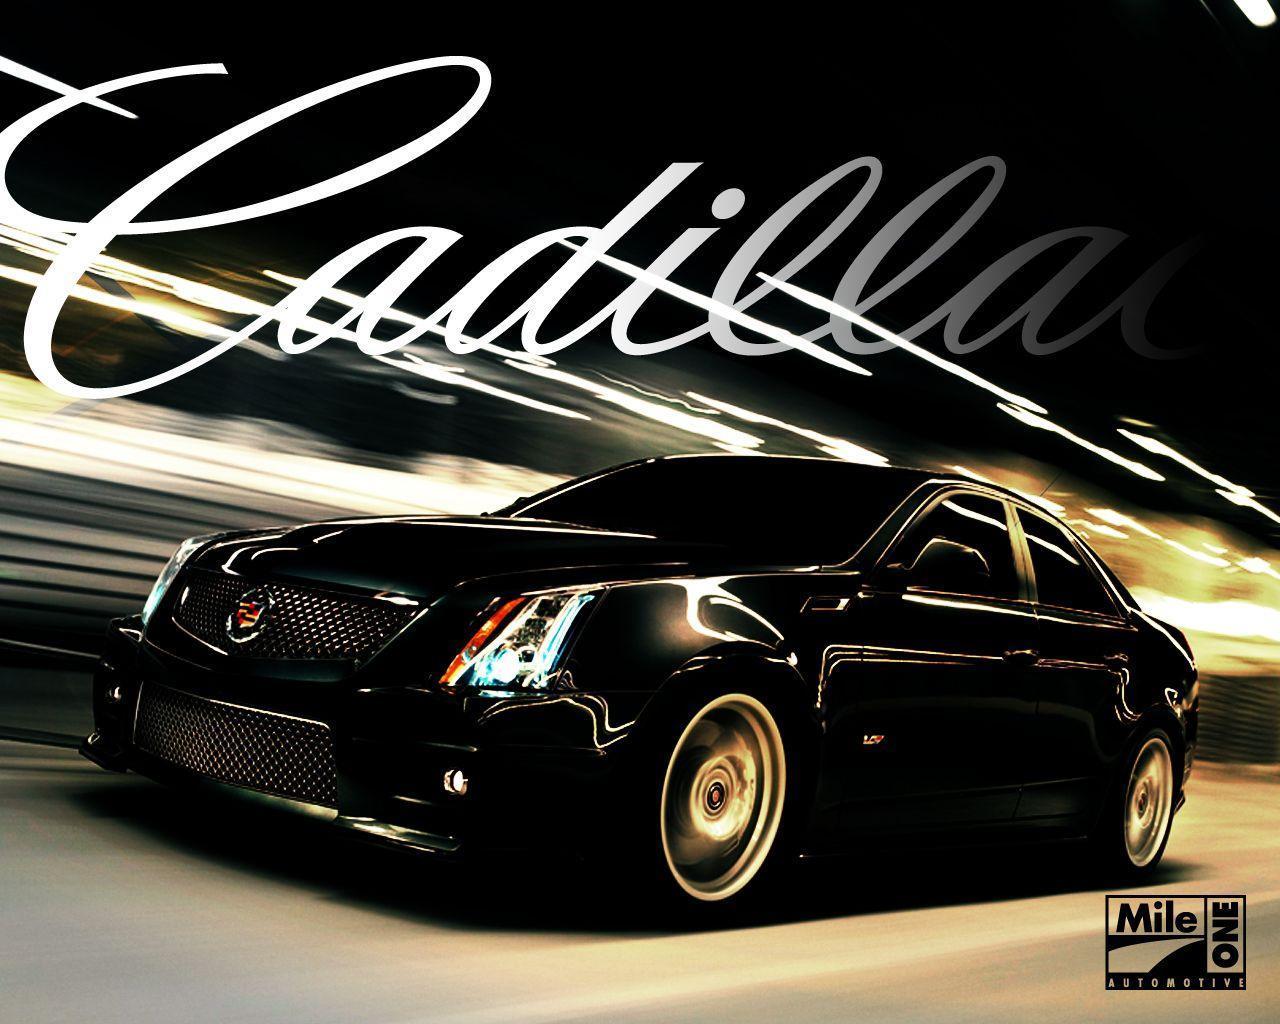 Cadillac Car Wallpapers Top Free Cadillac Car Backgrounds Wallpaperaccess